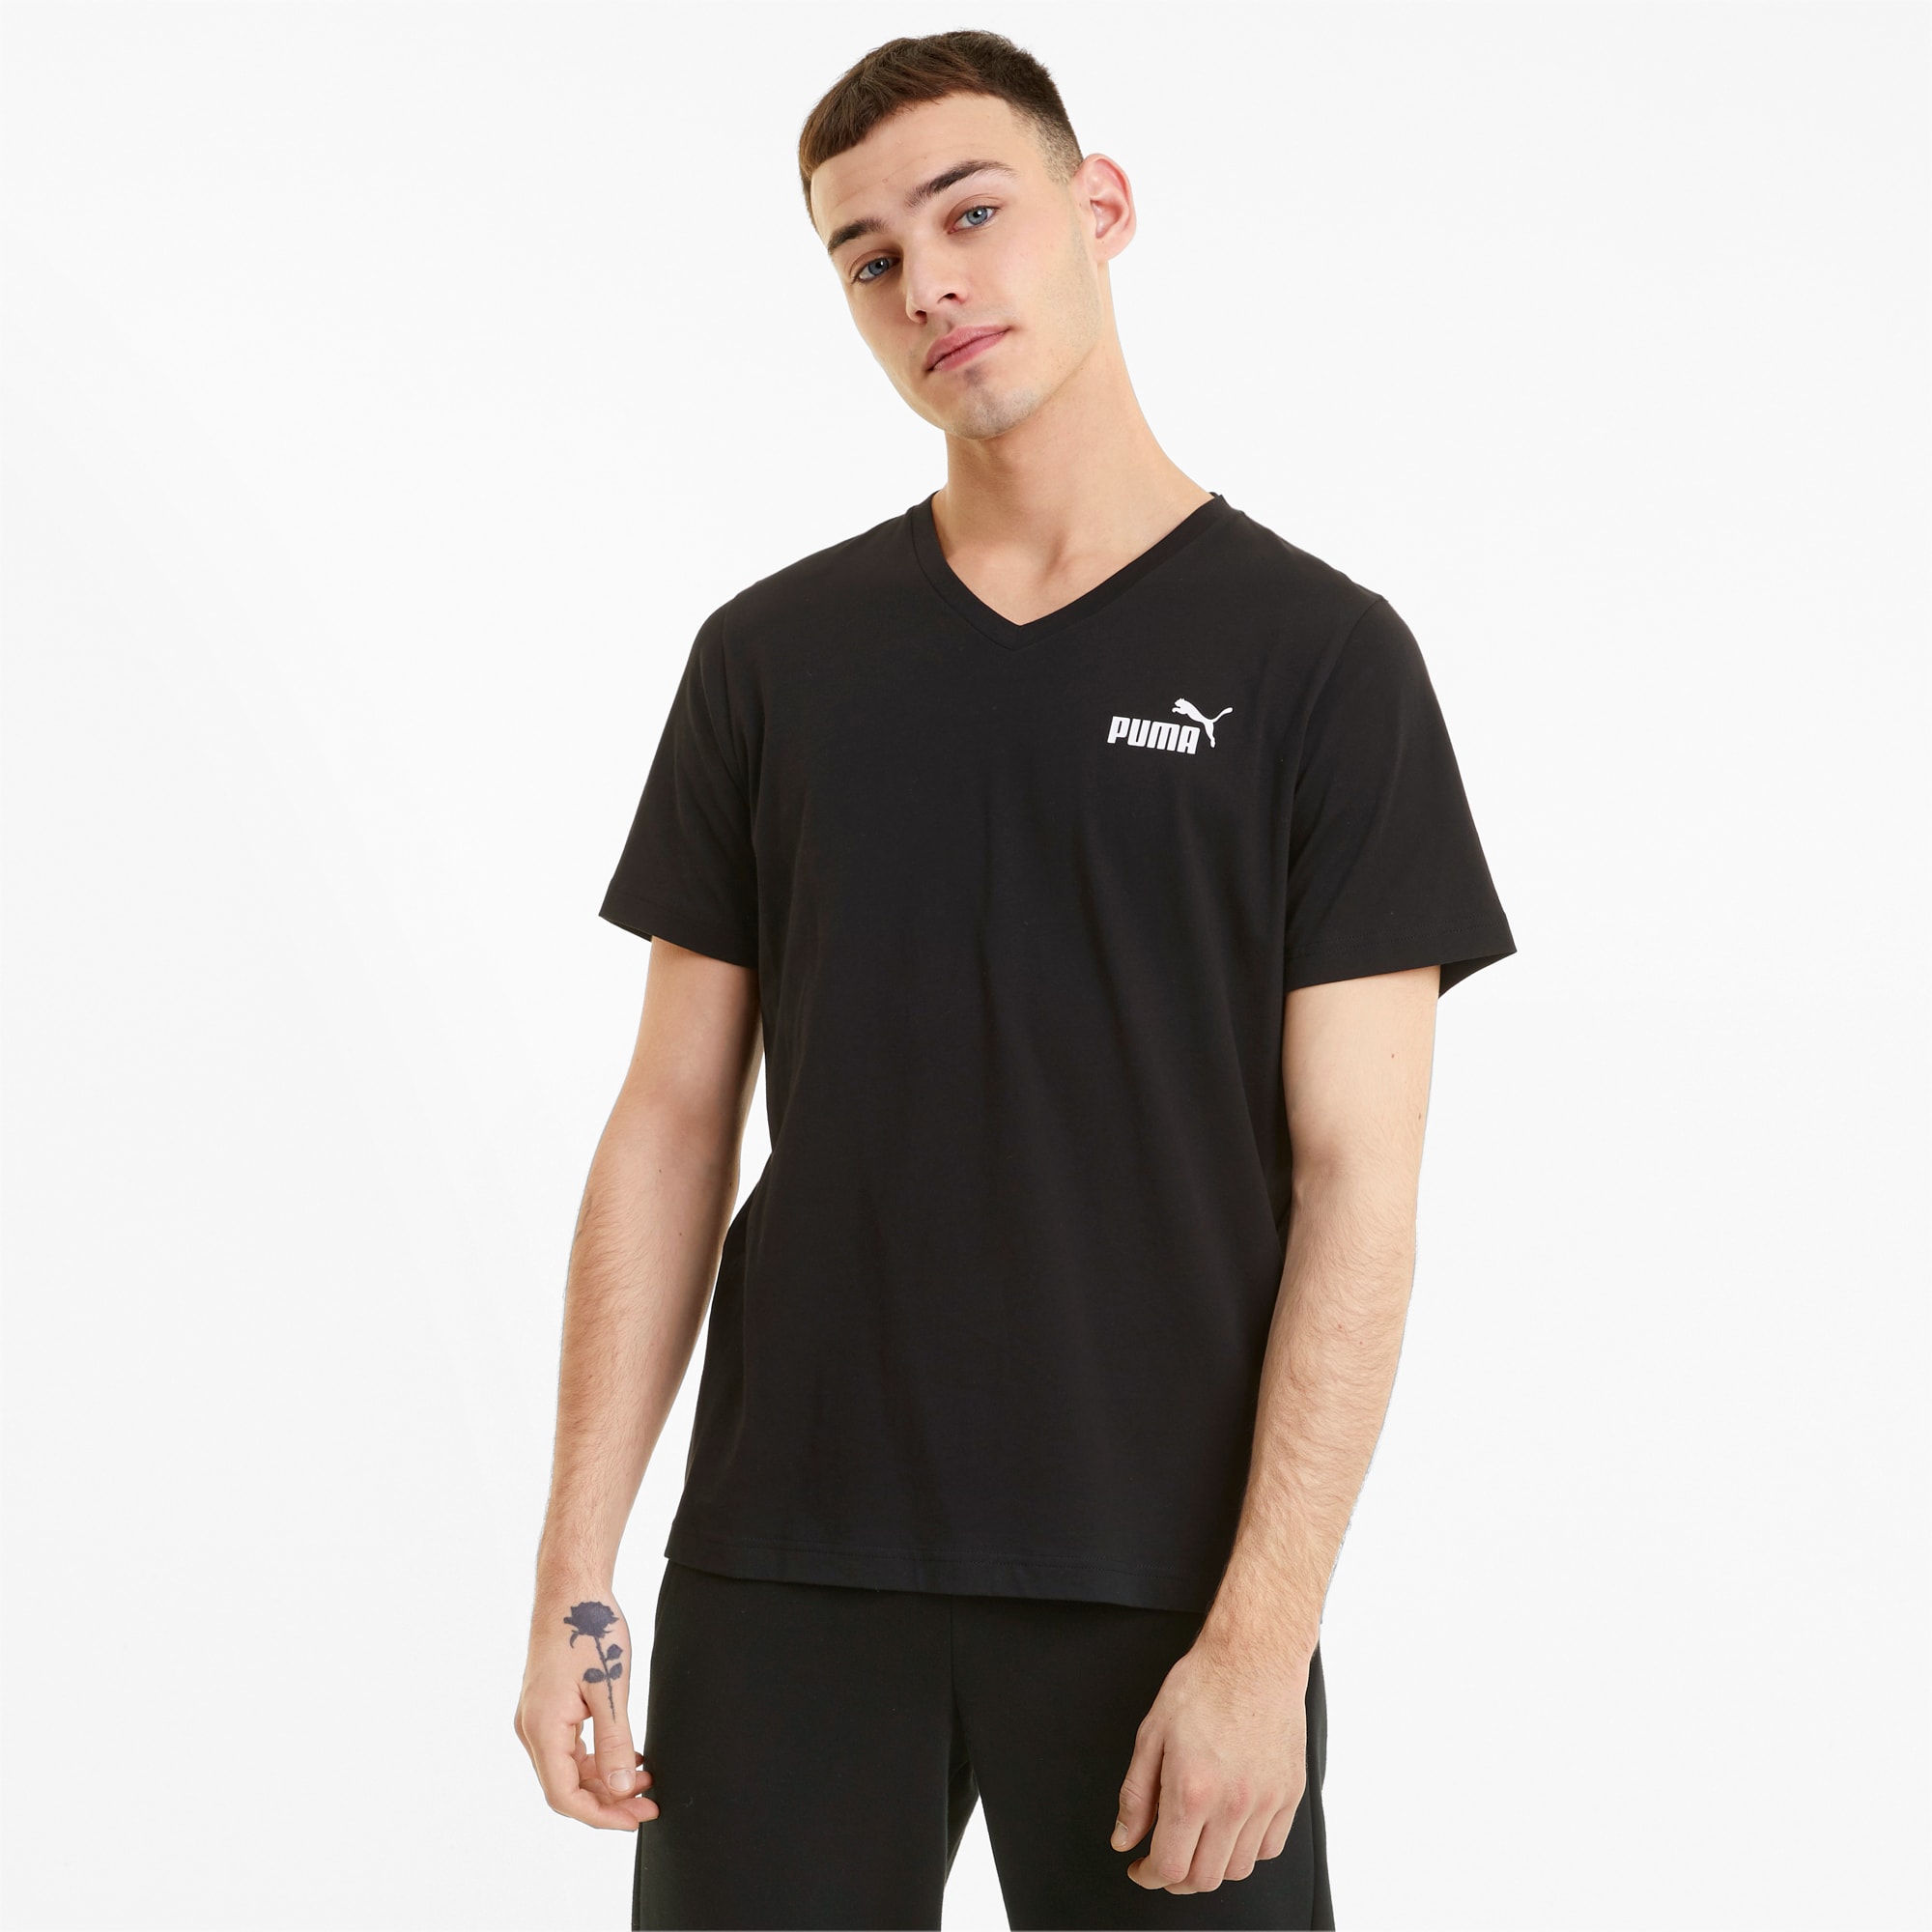 PUMA Essentials V-Neck T-Shirt Men, Black, Size M, Clothing